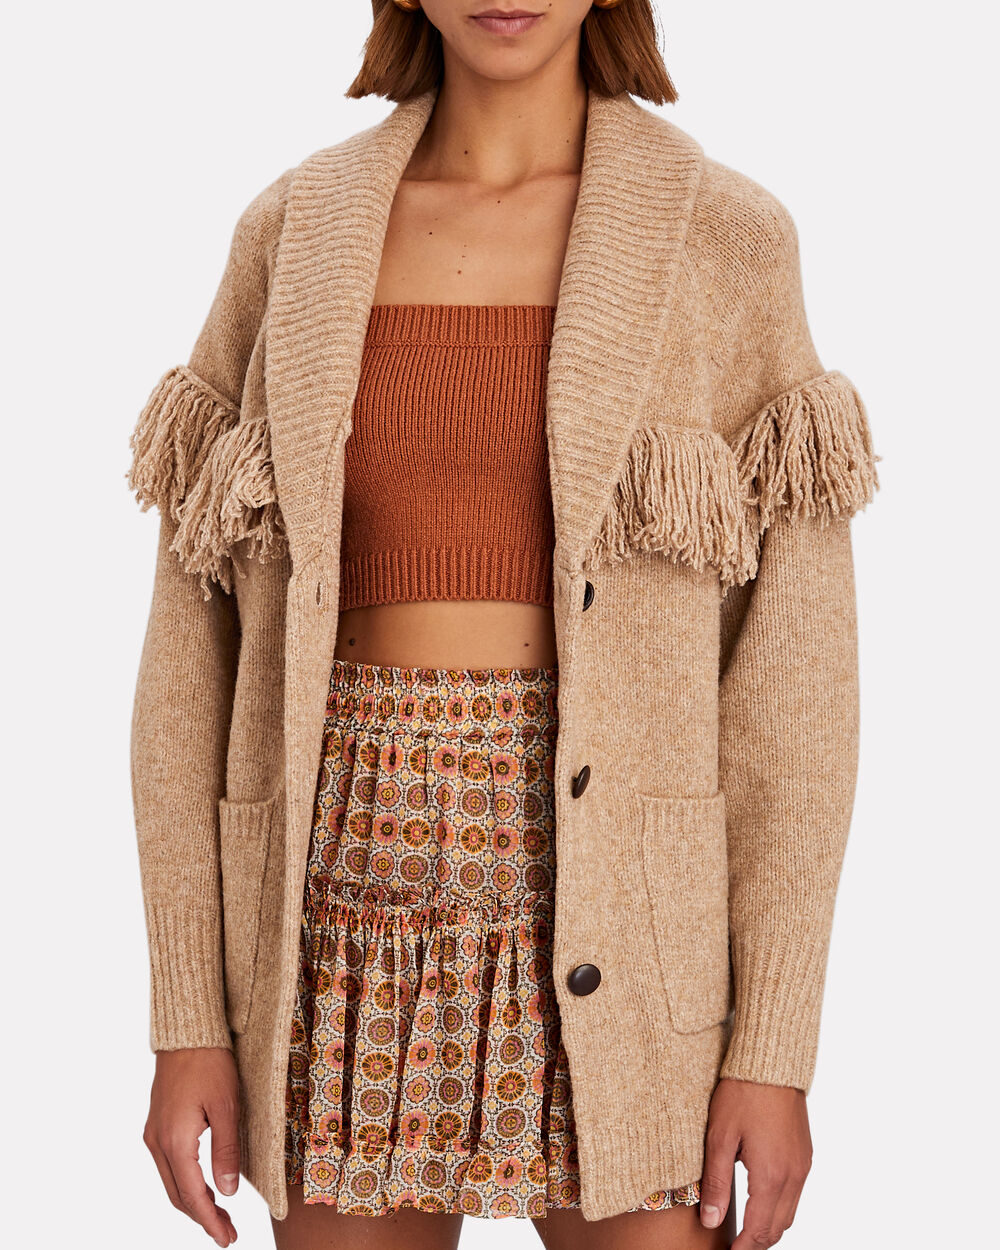 Bkolouuoe Womens Mid Length FurBall Fringe Shawl Sweater Fashion Knit  Jacket Juniors Jacket Warm Sweater Coat Cardigan for Women Cotton 